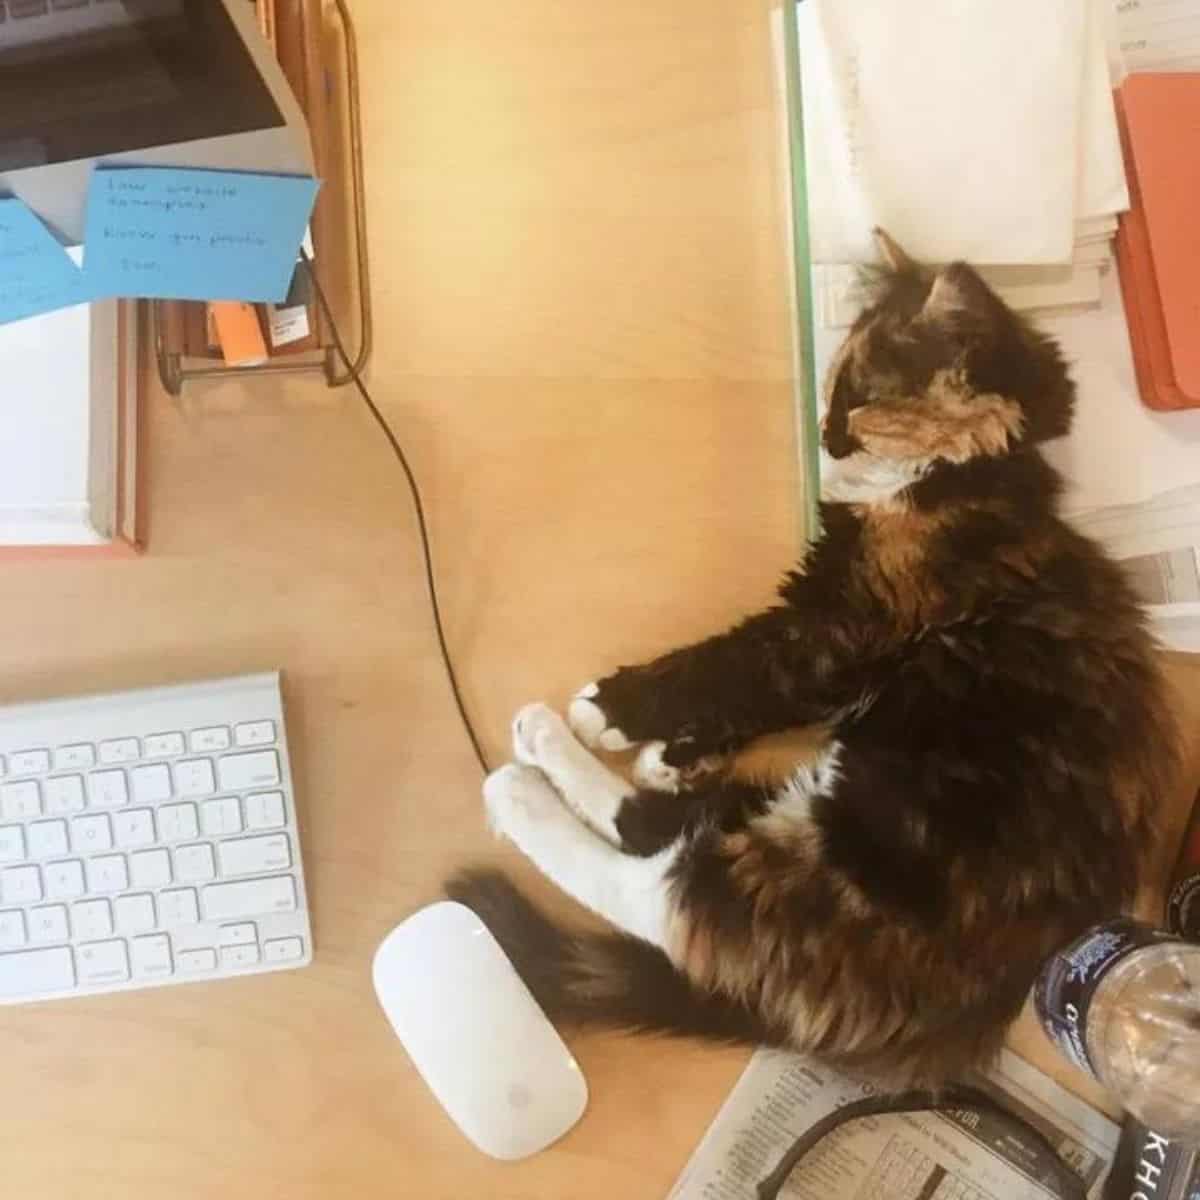 adopted kitten sleeps on the desk